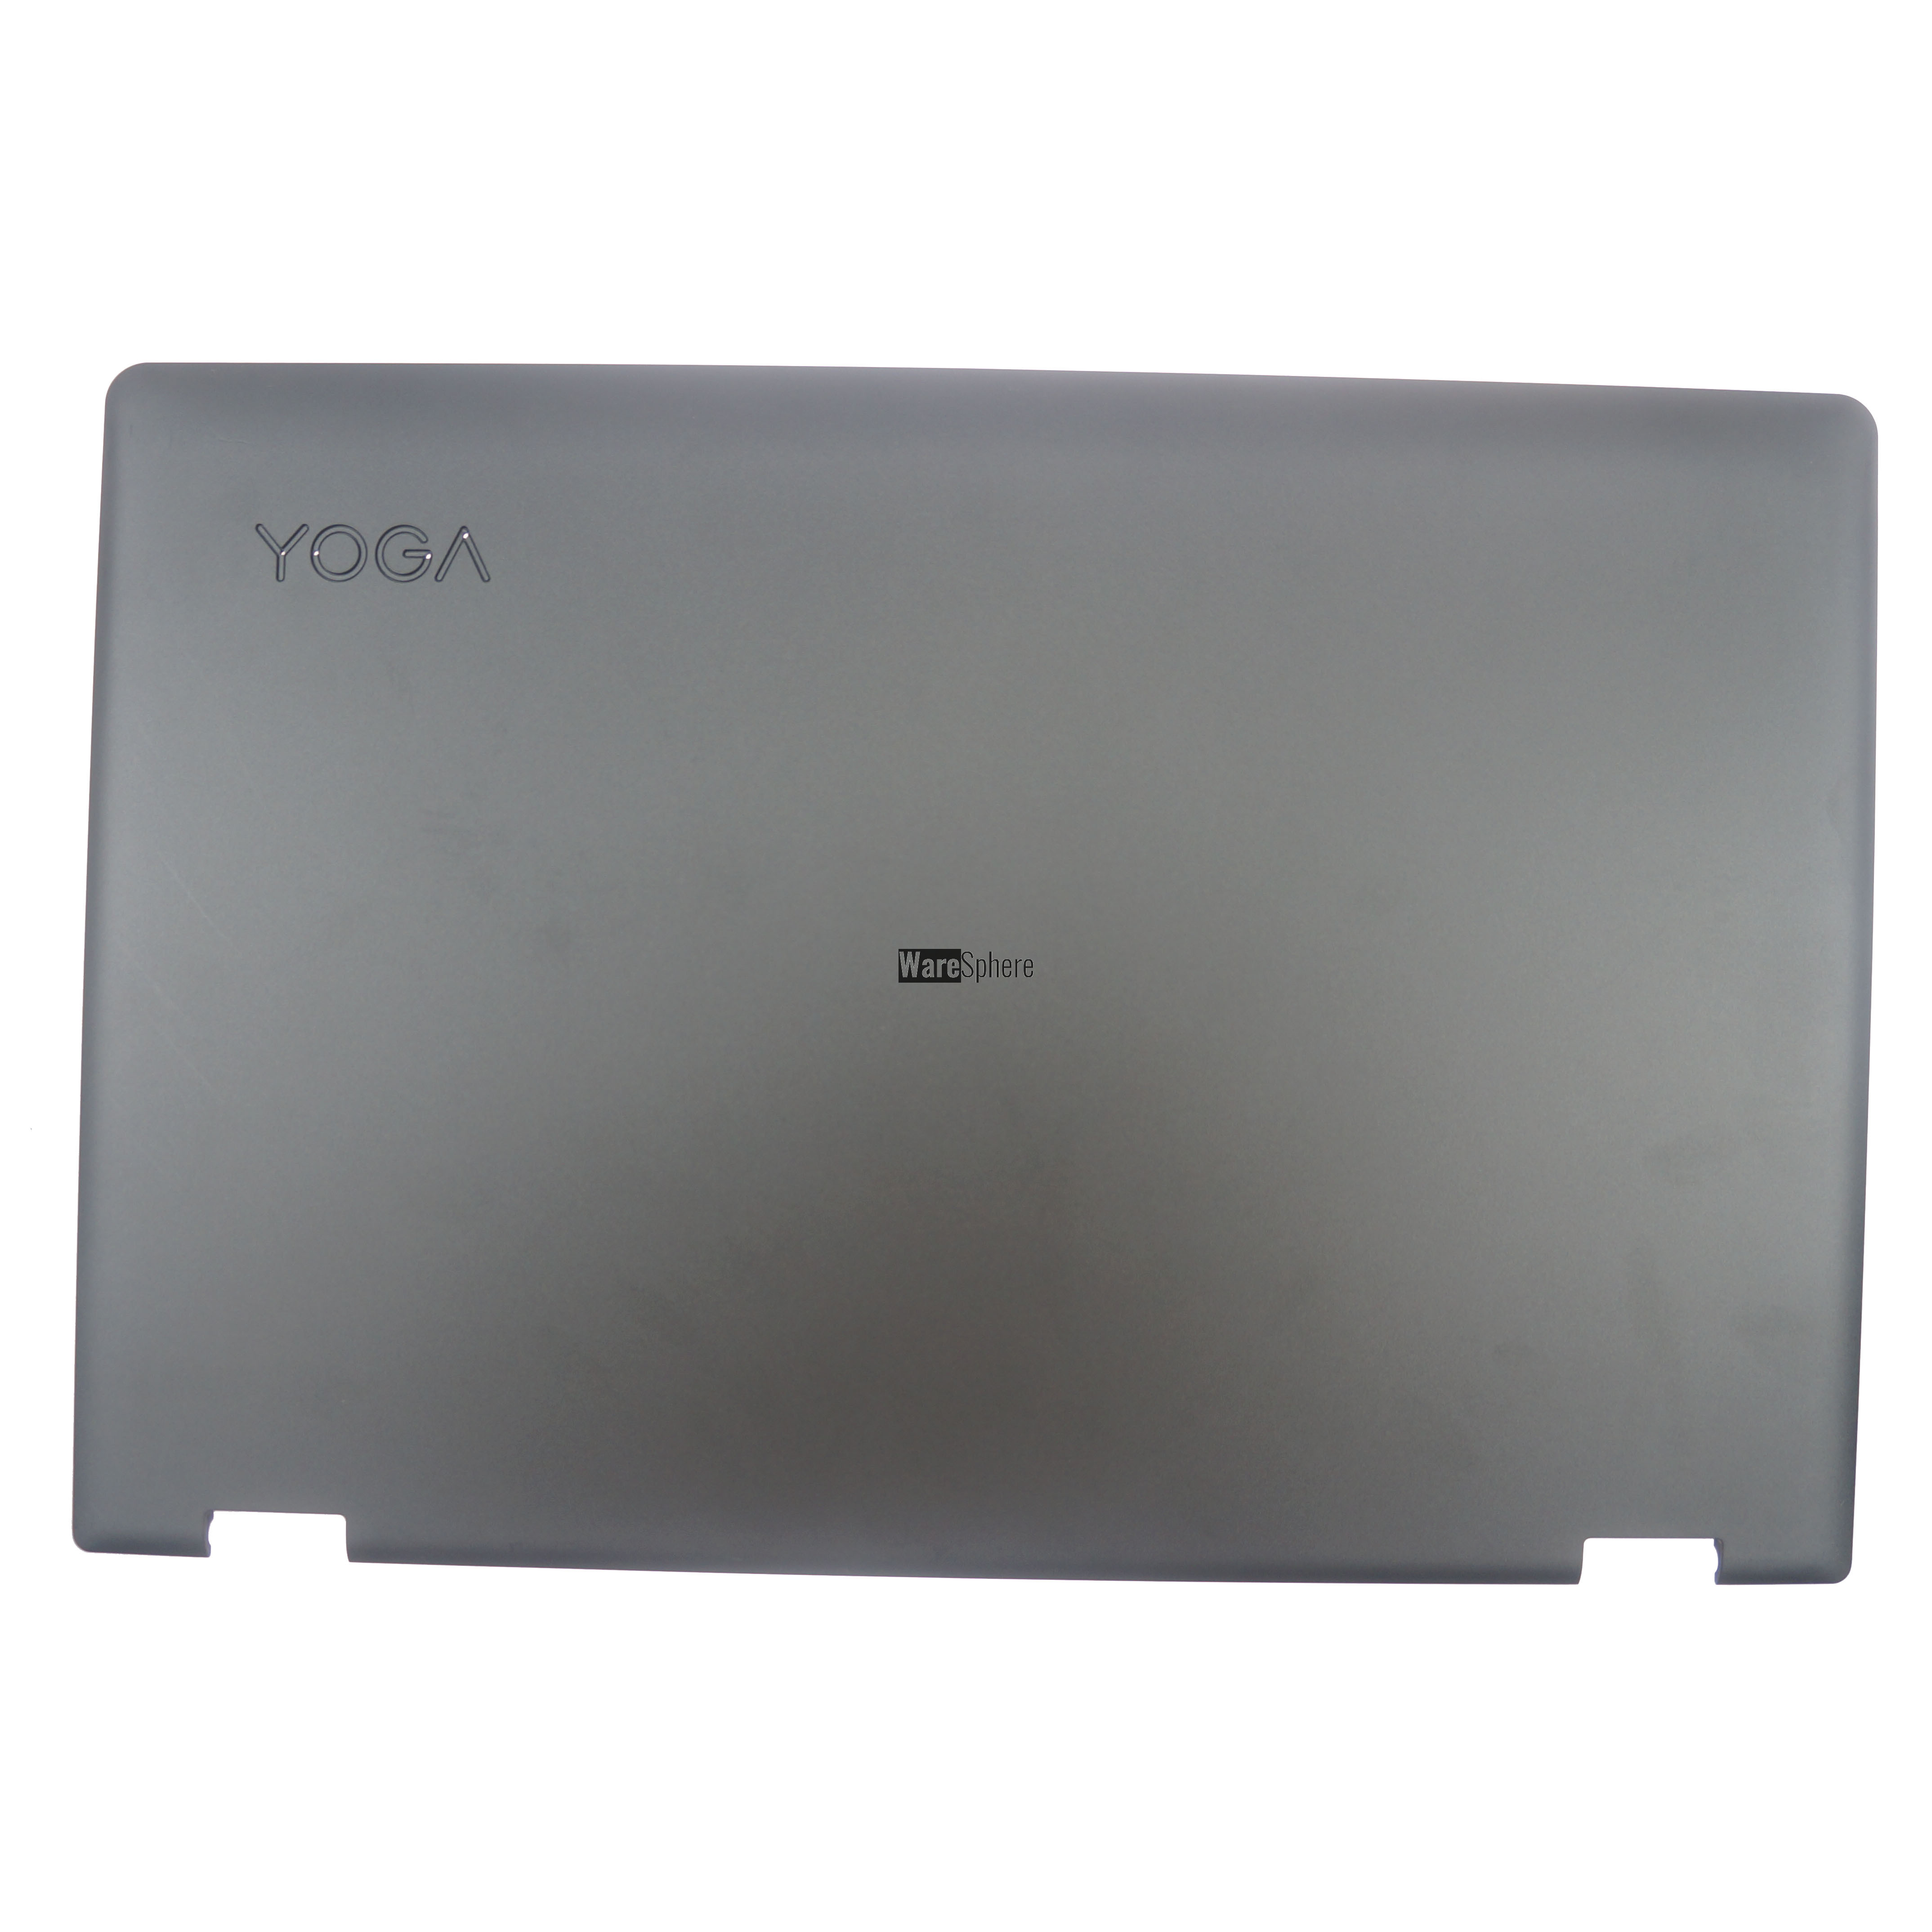 LCD Rear Back for Lenovo Ideapad Flex 4-1570 14-1580 510-15 Nontouch AP1JD000100  AP1JD000110  Black With Yoga Loga